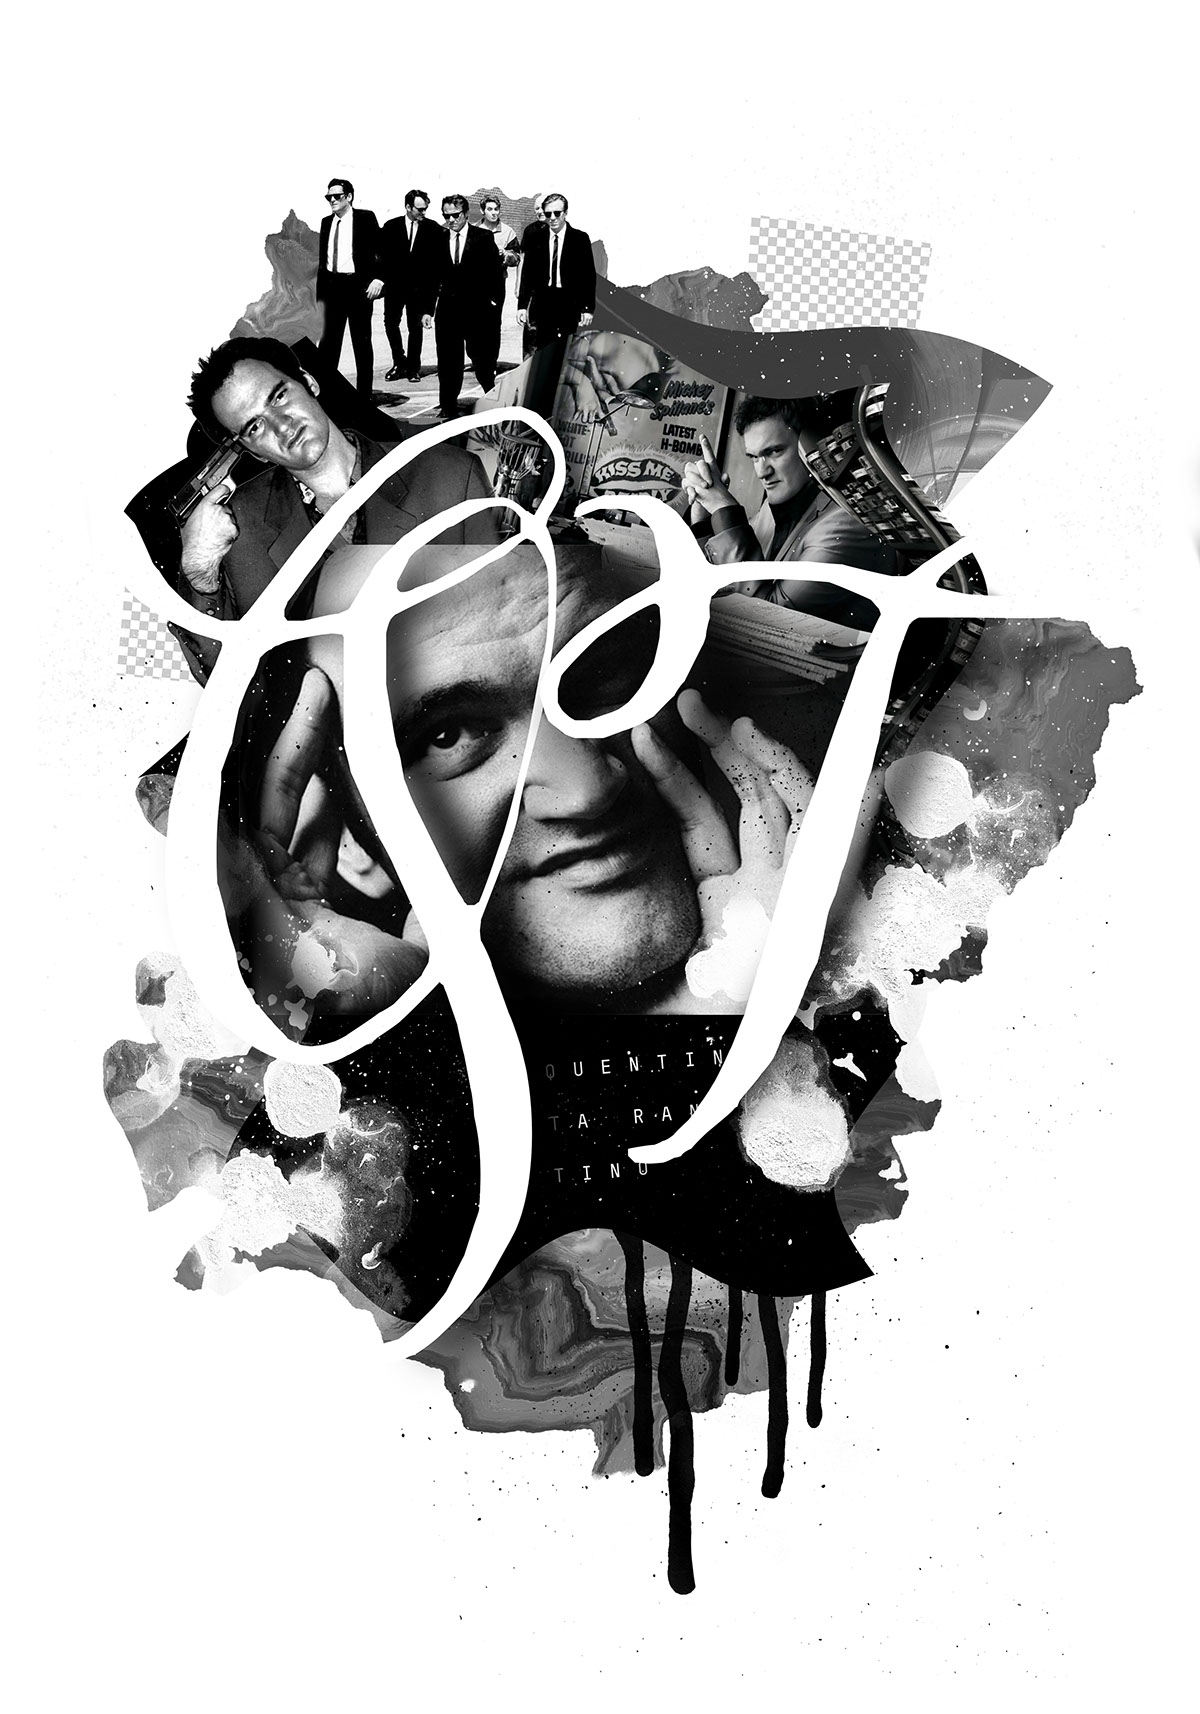 art poster Icon movie design black White artist istanbul London Hitchcock Tarantino scorsese Coen brothers fellini